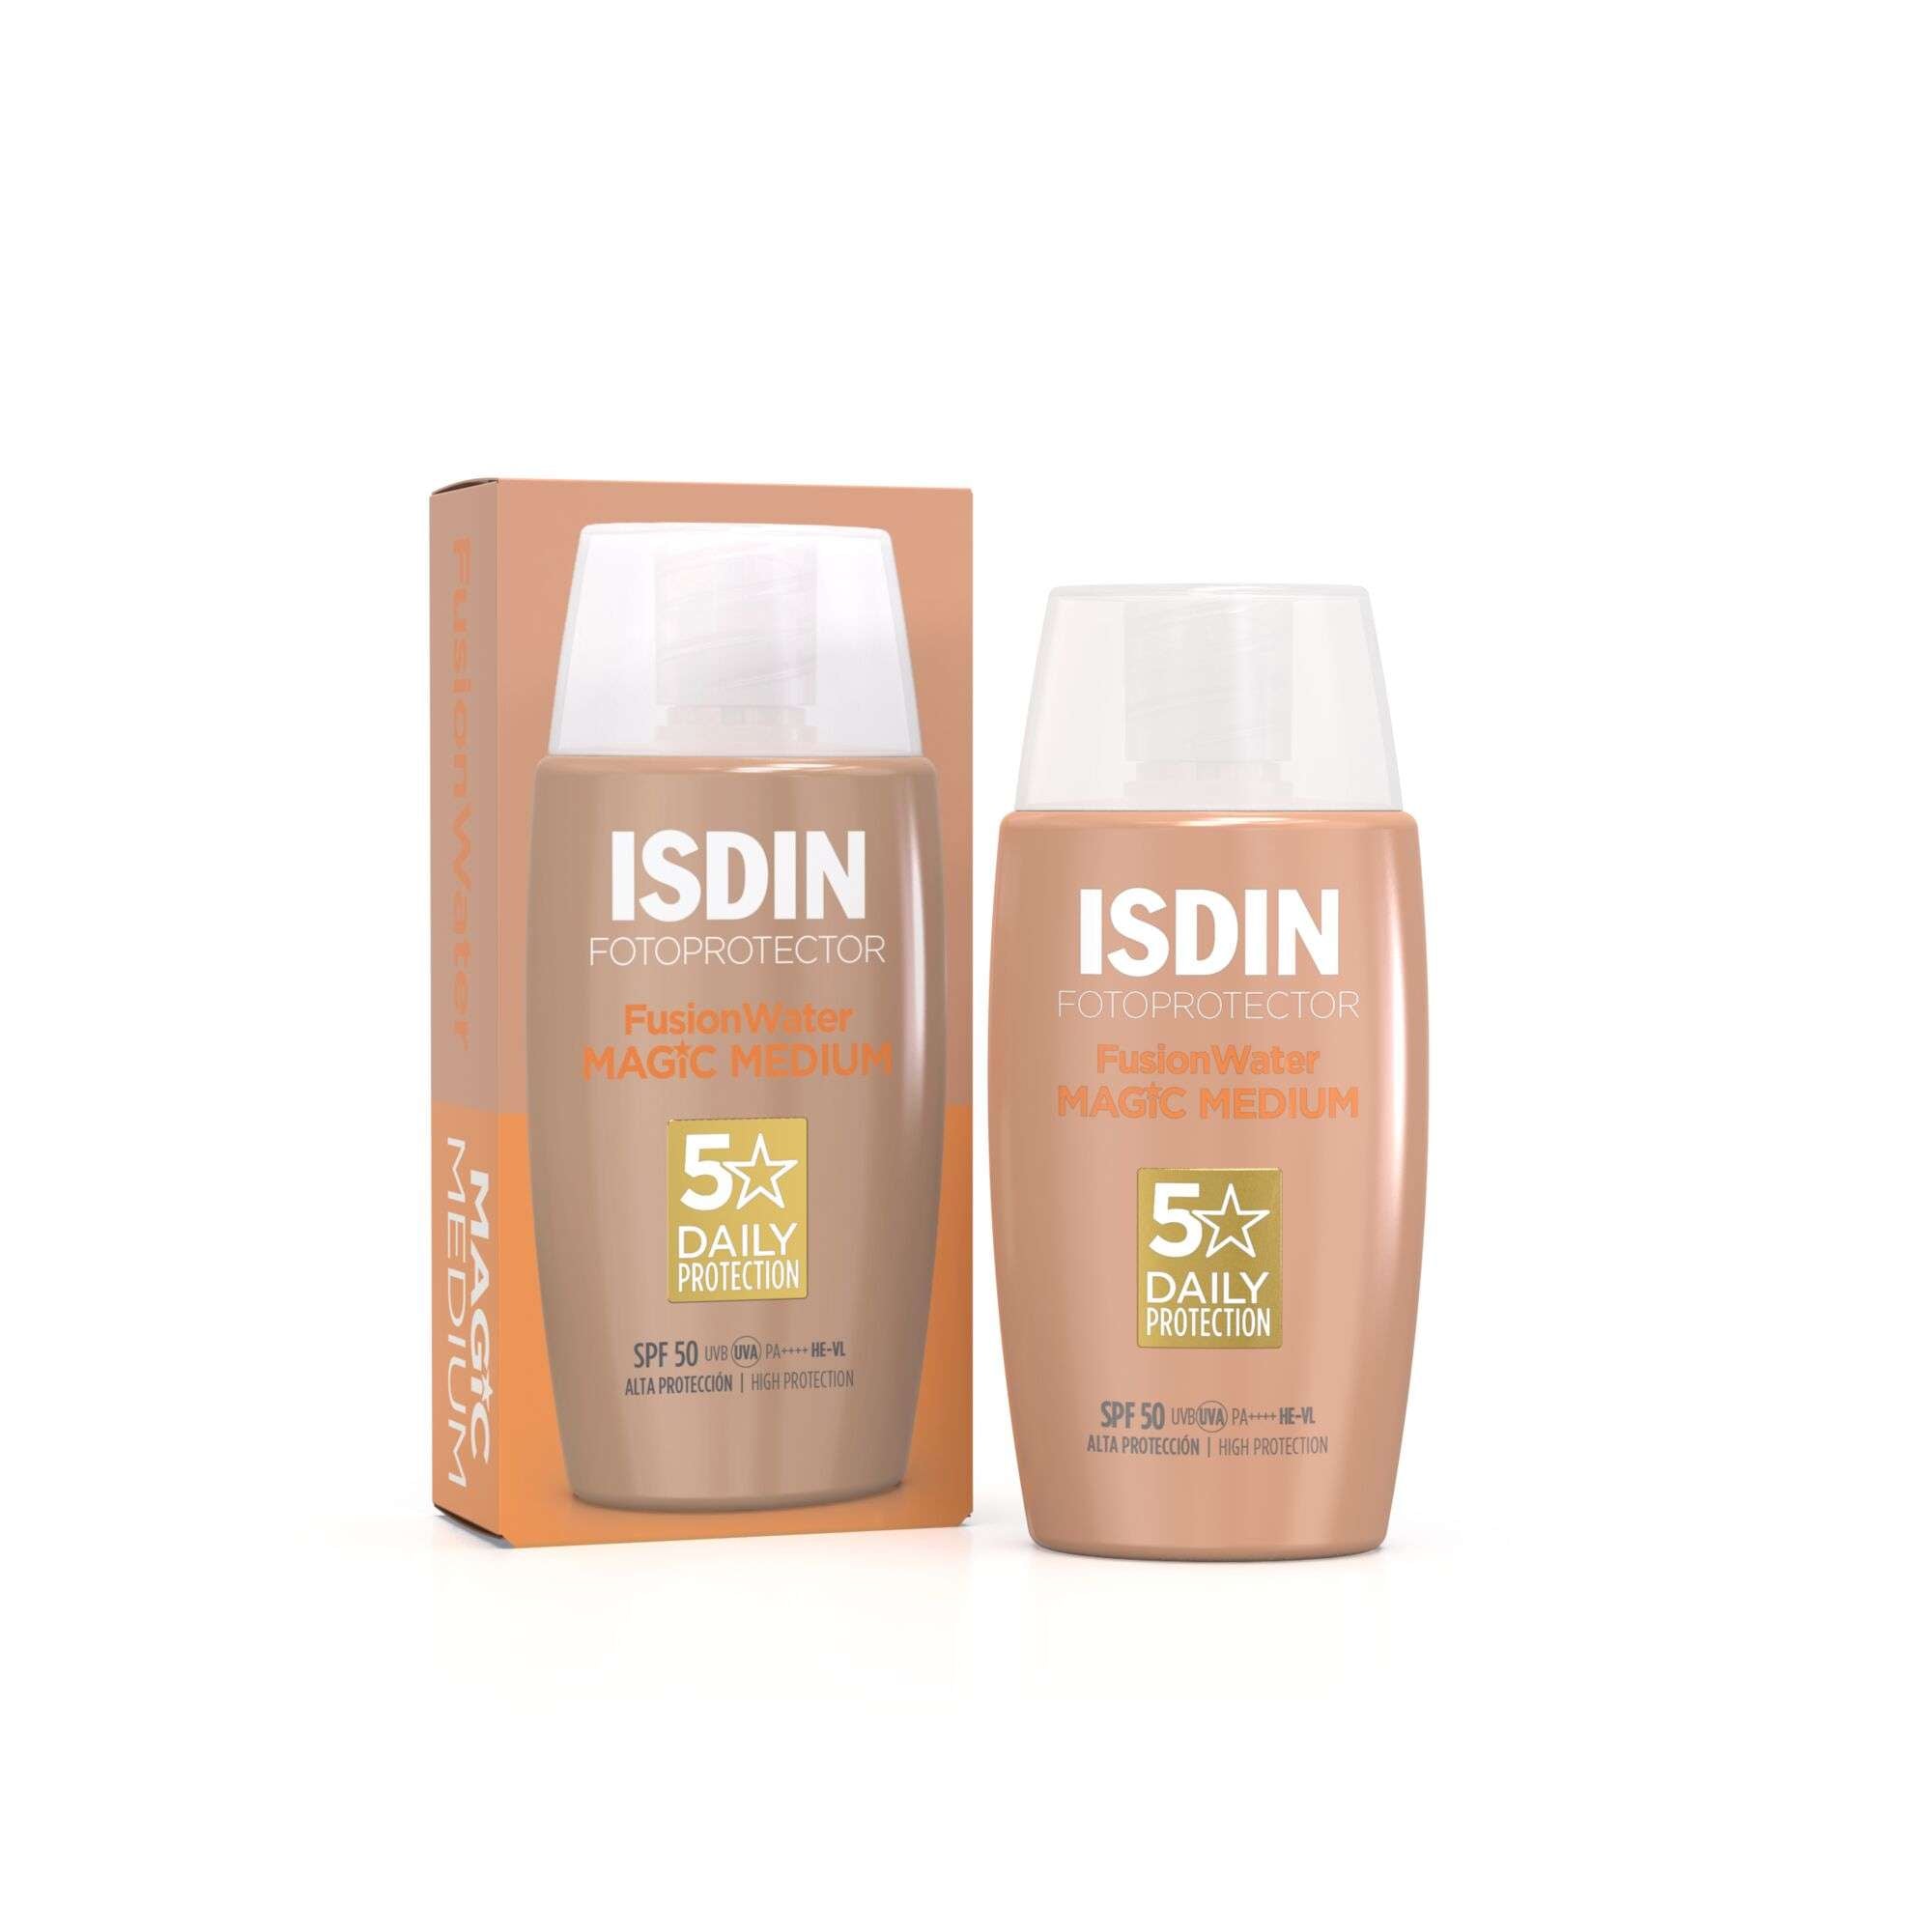 ISDIN Fotoprotector Fusion Water Color MEDIUM SPF50 50ML - Protetor solar facial com cor